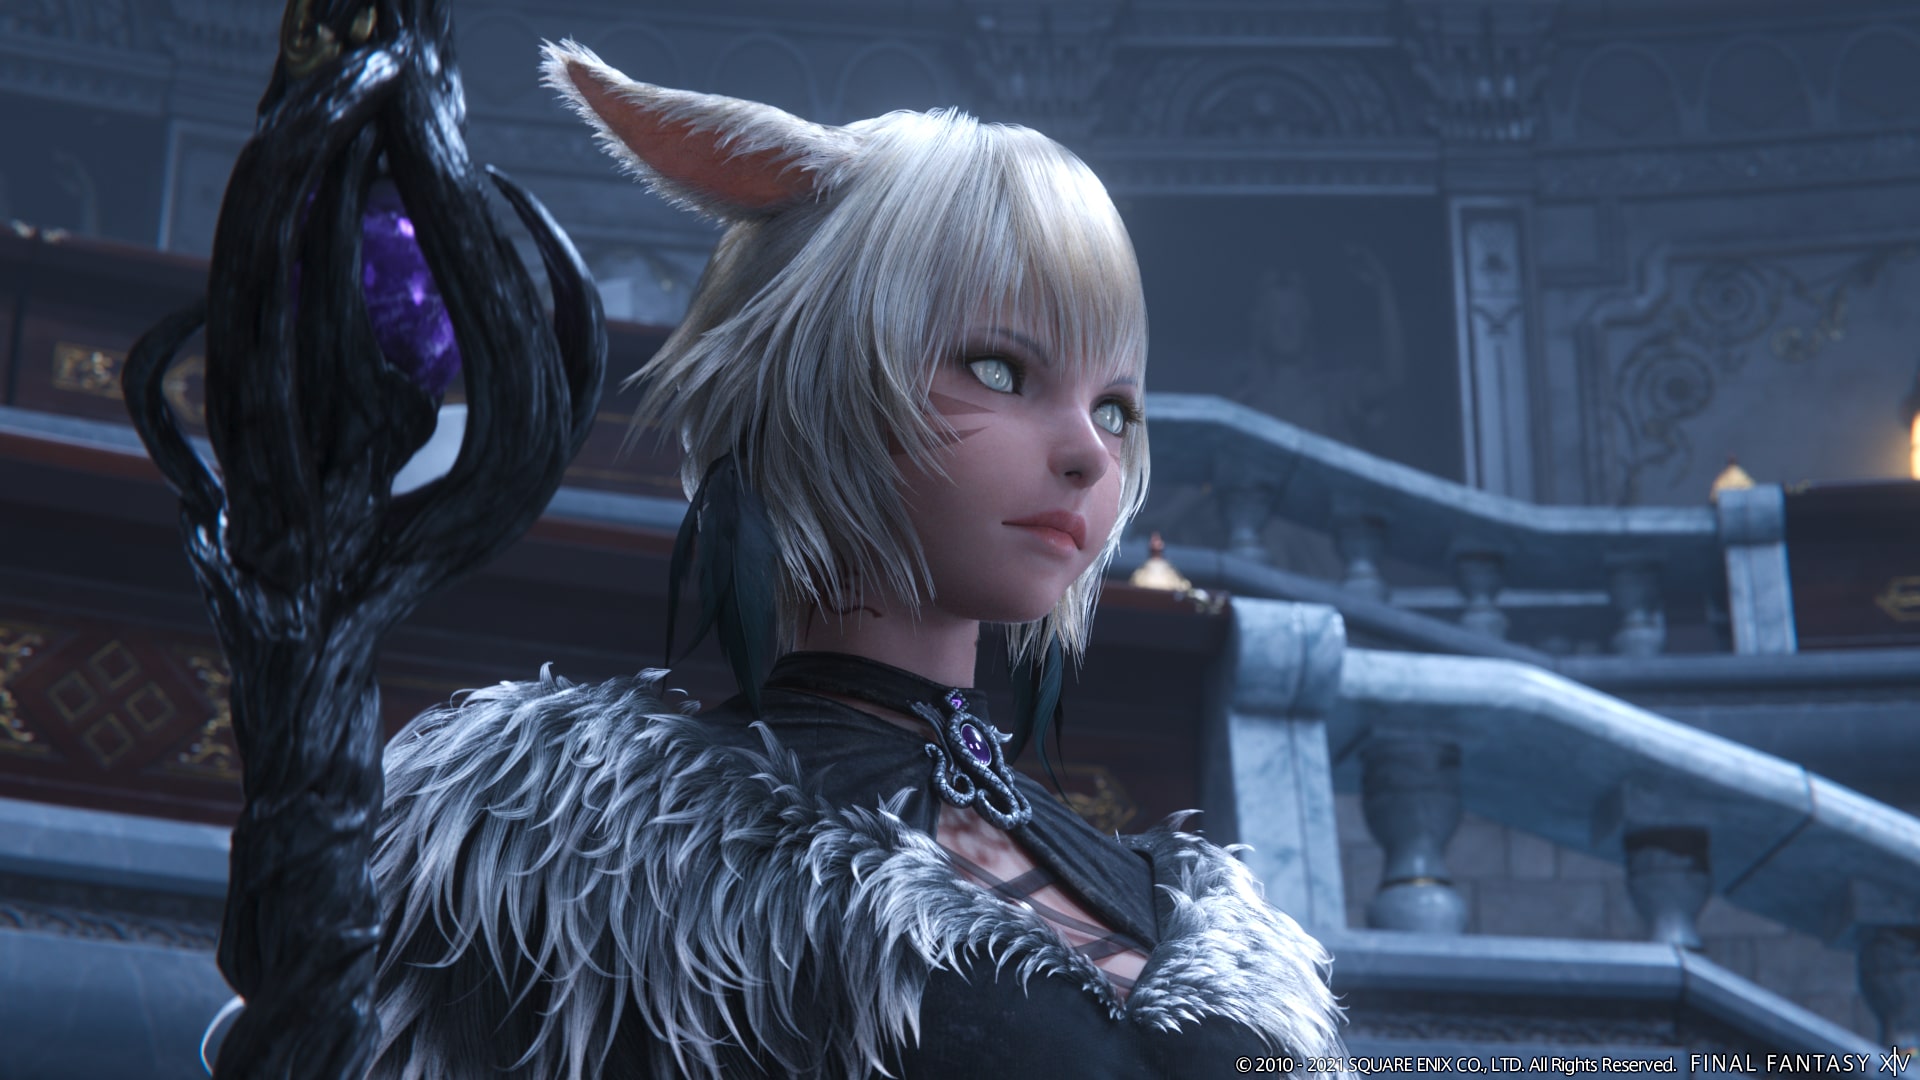 In-game screenshot of Final Fantasy XIV showcasing an epic fantasy world